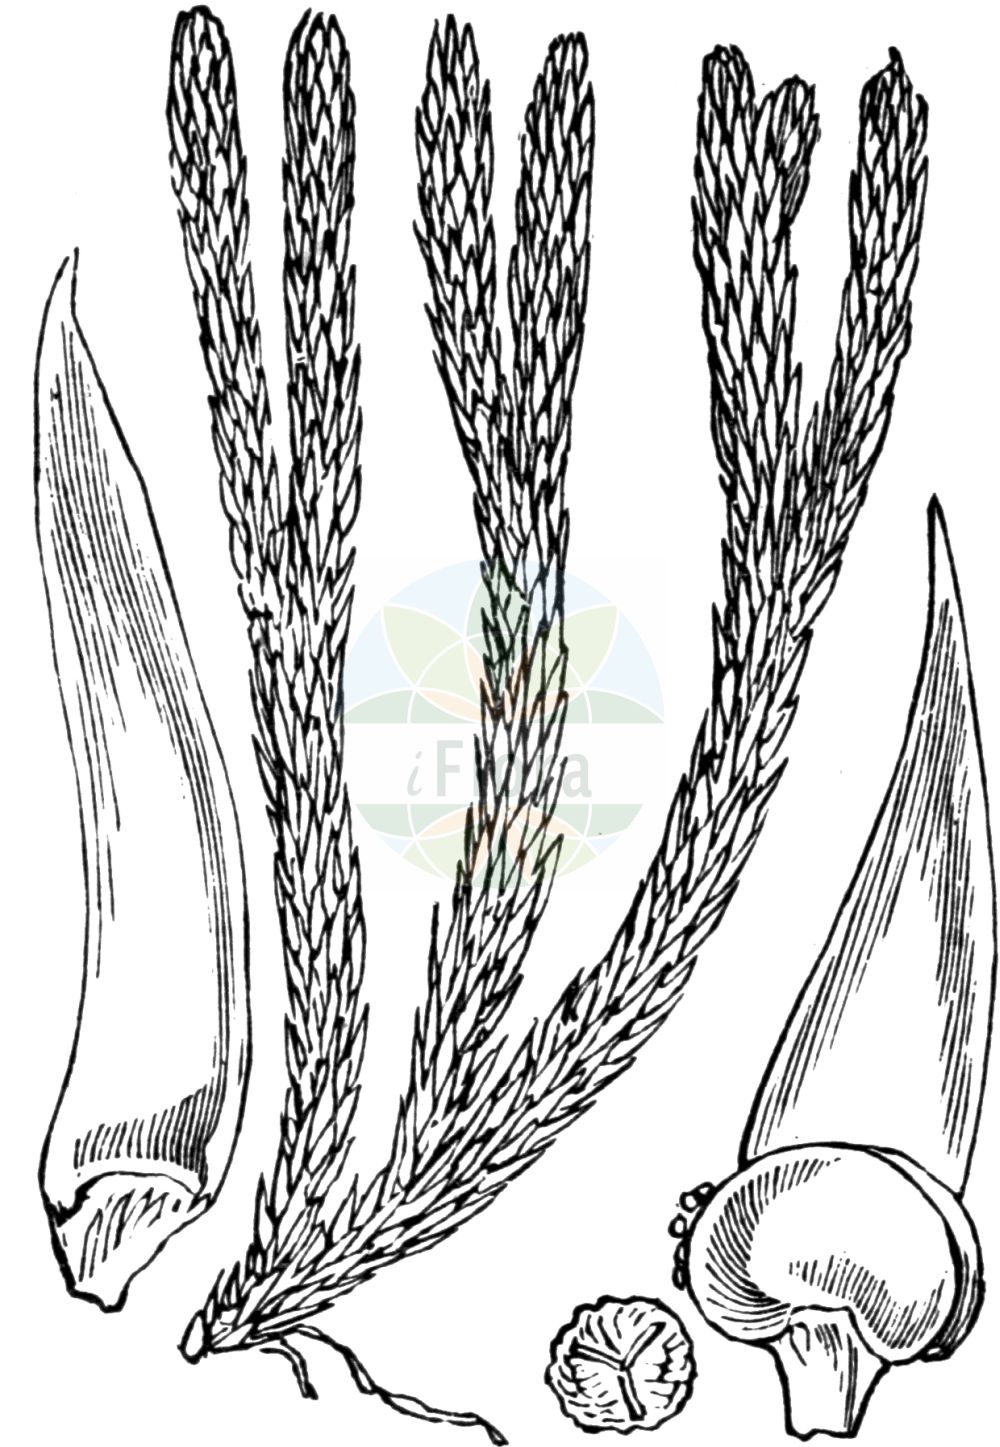 Historische Abbildung von Huperzia selago (Tannen-Bärlapp - Fir Clubmoss). Das Bild zeigt Blatt, Bluete, Frucht und Same. ---- Historical Drawing of Huperzia selago (Tannen-Bärlapp - Fir Clubmoss). The image is showing leaf, flower, fruit and seed.(Huperzia selago,Tannen-Bärlapp,Fir Clubmoss,Huperzia petrovii,Huperzia selago,Lycopodium selago,Tannen-Baerlapp,Tangelkraut,Tannen-Teufelsklaue,Fir Clubmoss,Huperzia,Teufelsklaue,Clubmoss,Lycopodiaceae,Bärlappgewächse,Clubmoss family,Blatt,Bluete,Frucht,Same,leaf,flower,fruit,seed,Fitch et al. (1880))